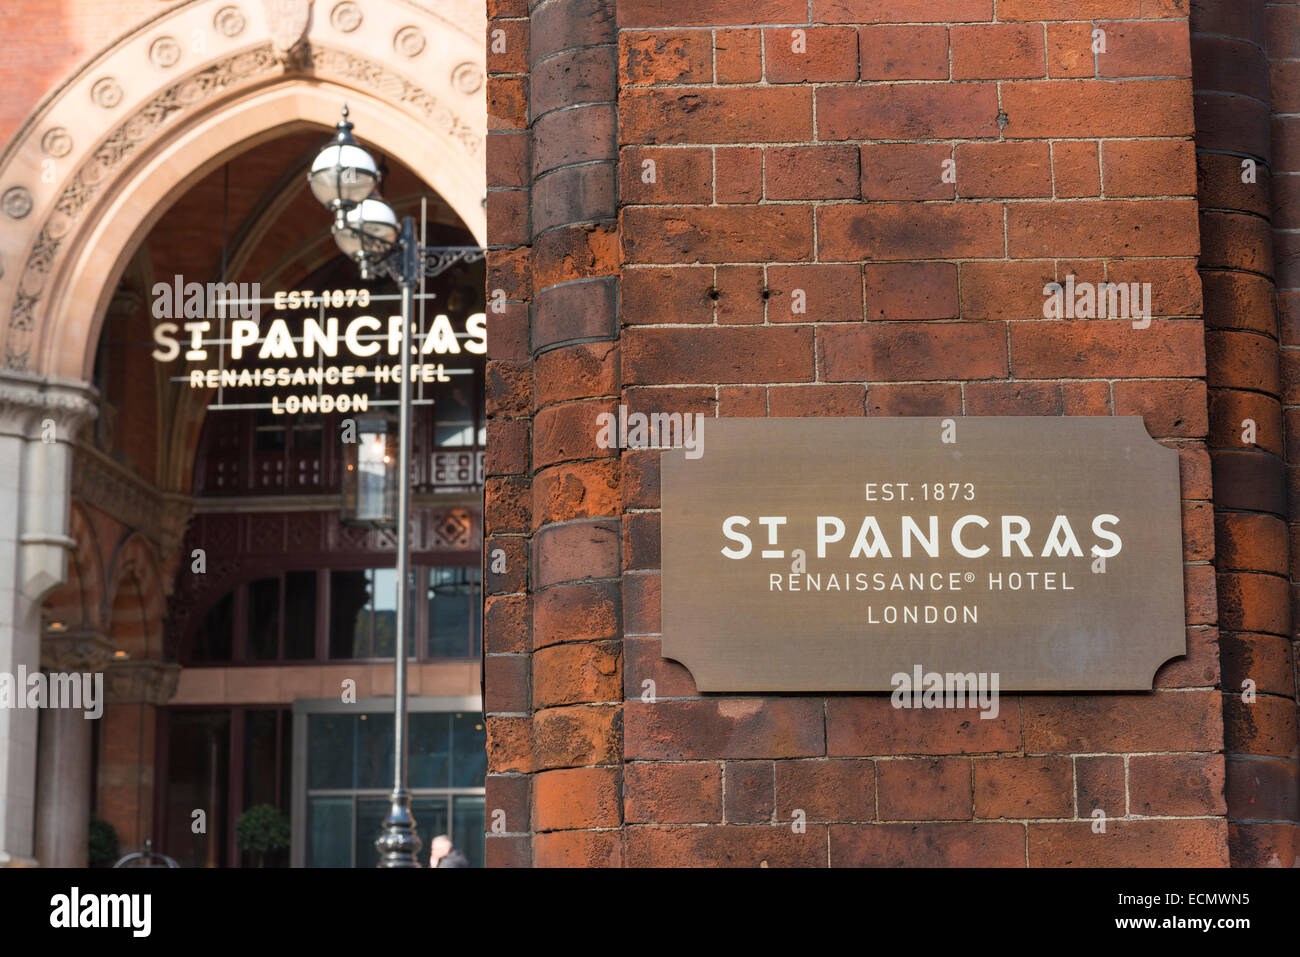 LONDON, UK - NOVEMBER 20: Detail of St. Pancras Renaissance Hotel entrance. November 20, 2014 in London. Formerly used as railwa Stock Photo